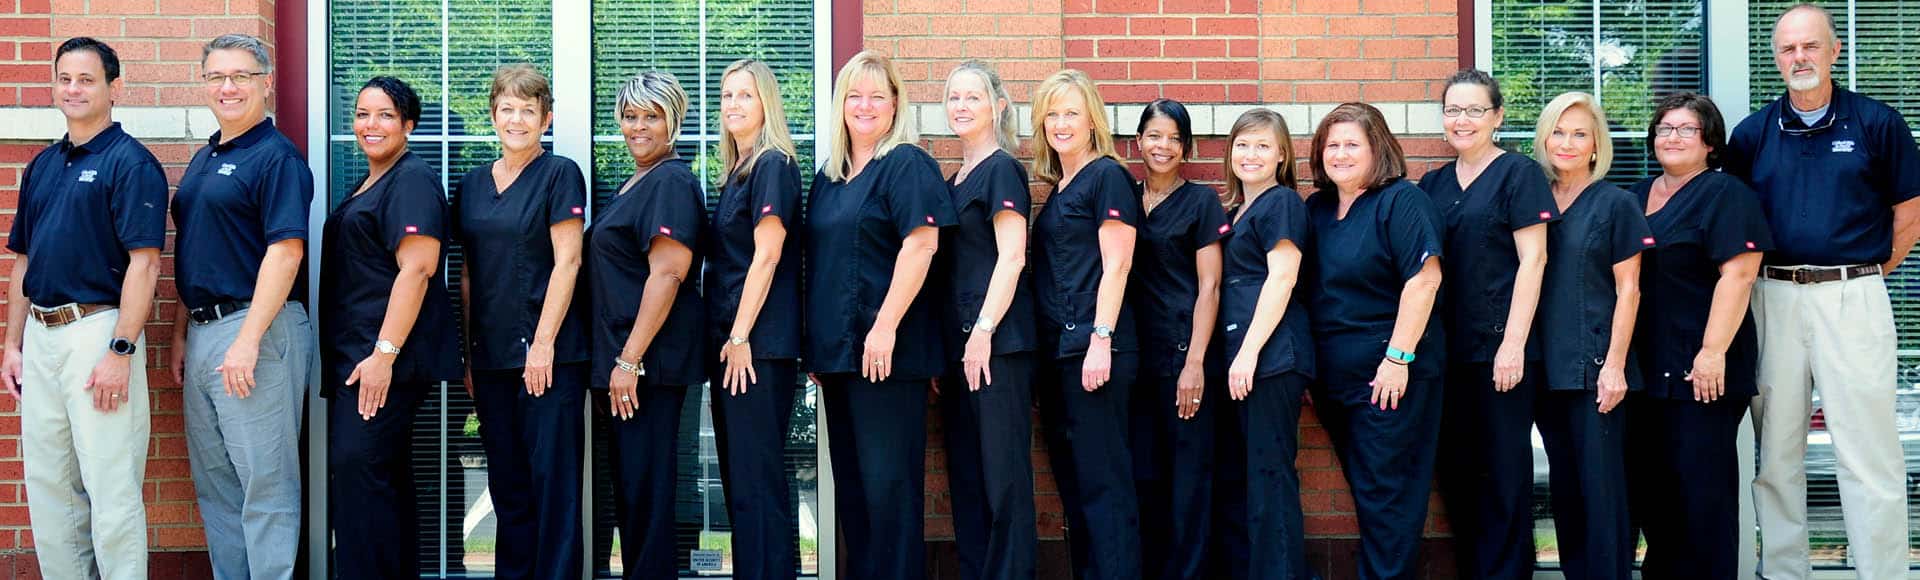 South Charlotte Dentists - Caldwell, Bills & Petrilli Dentistry Staff